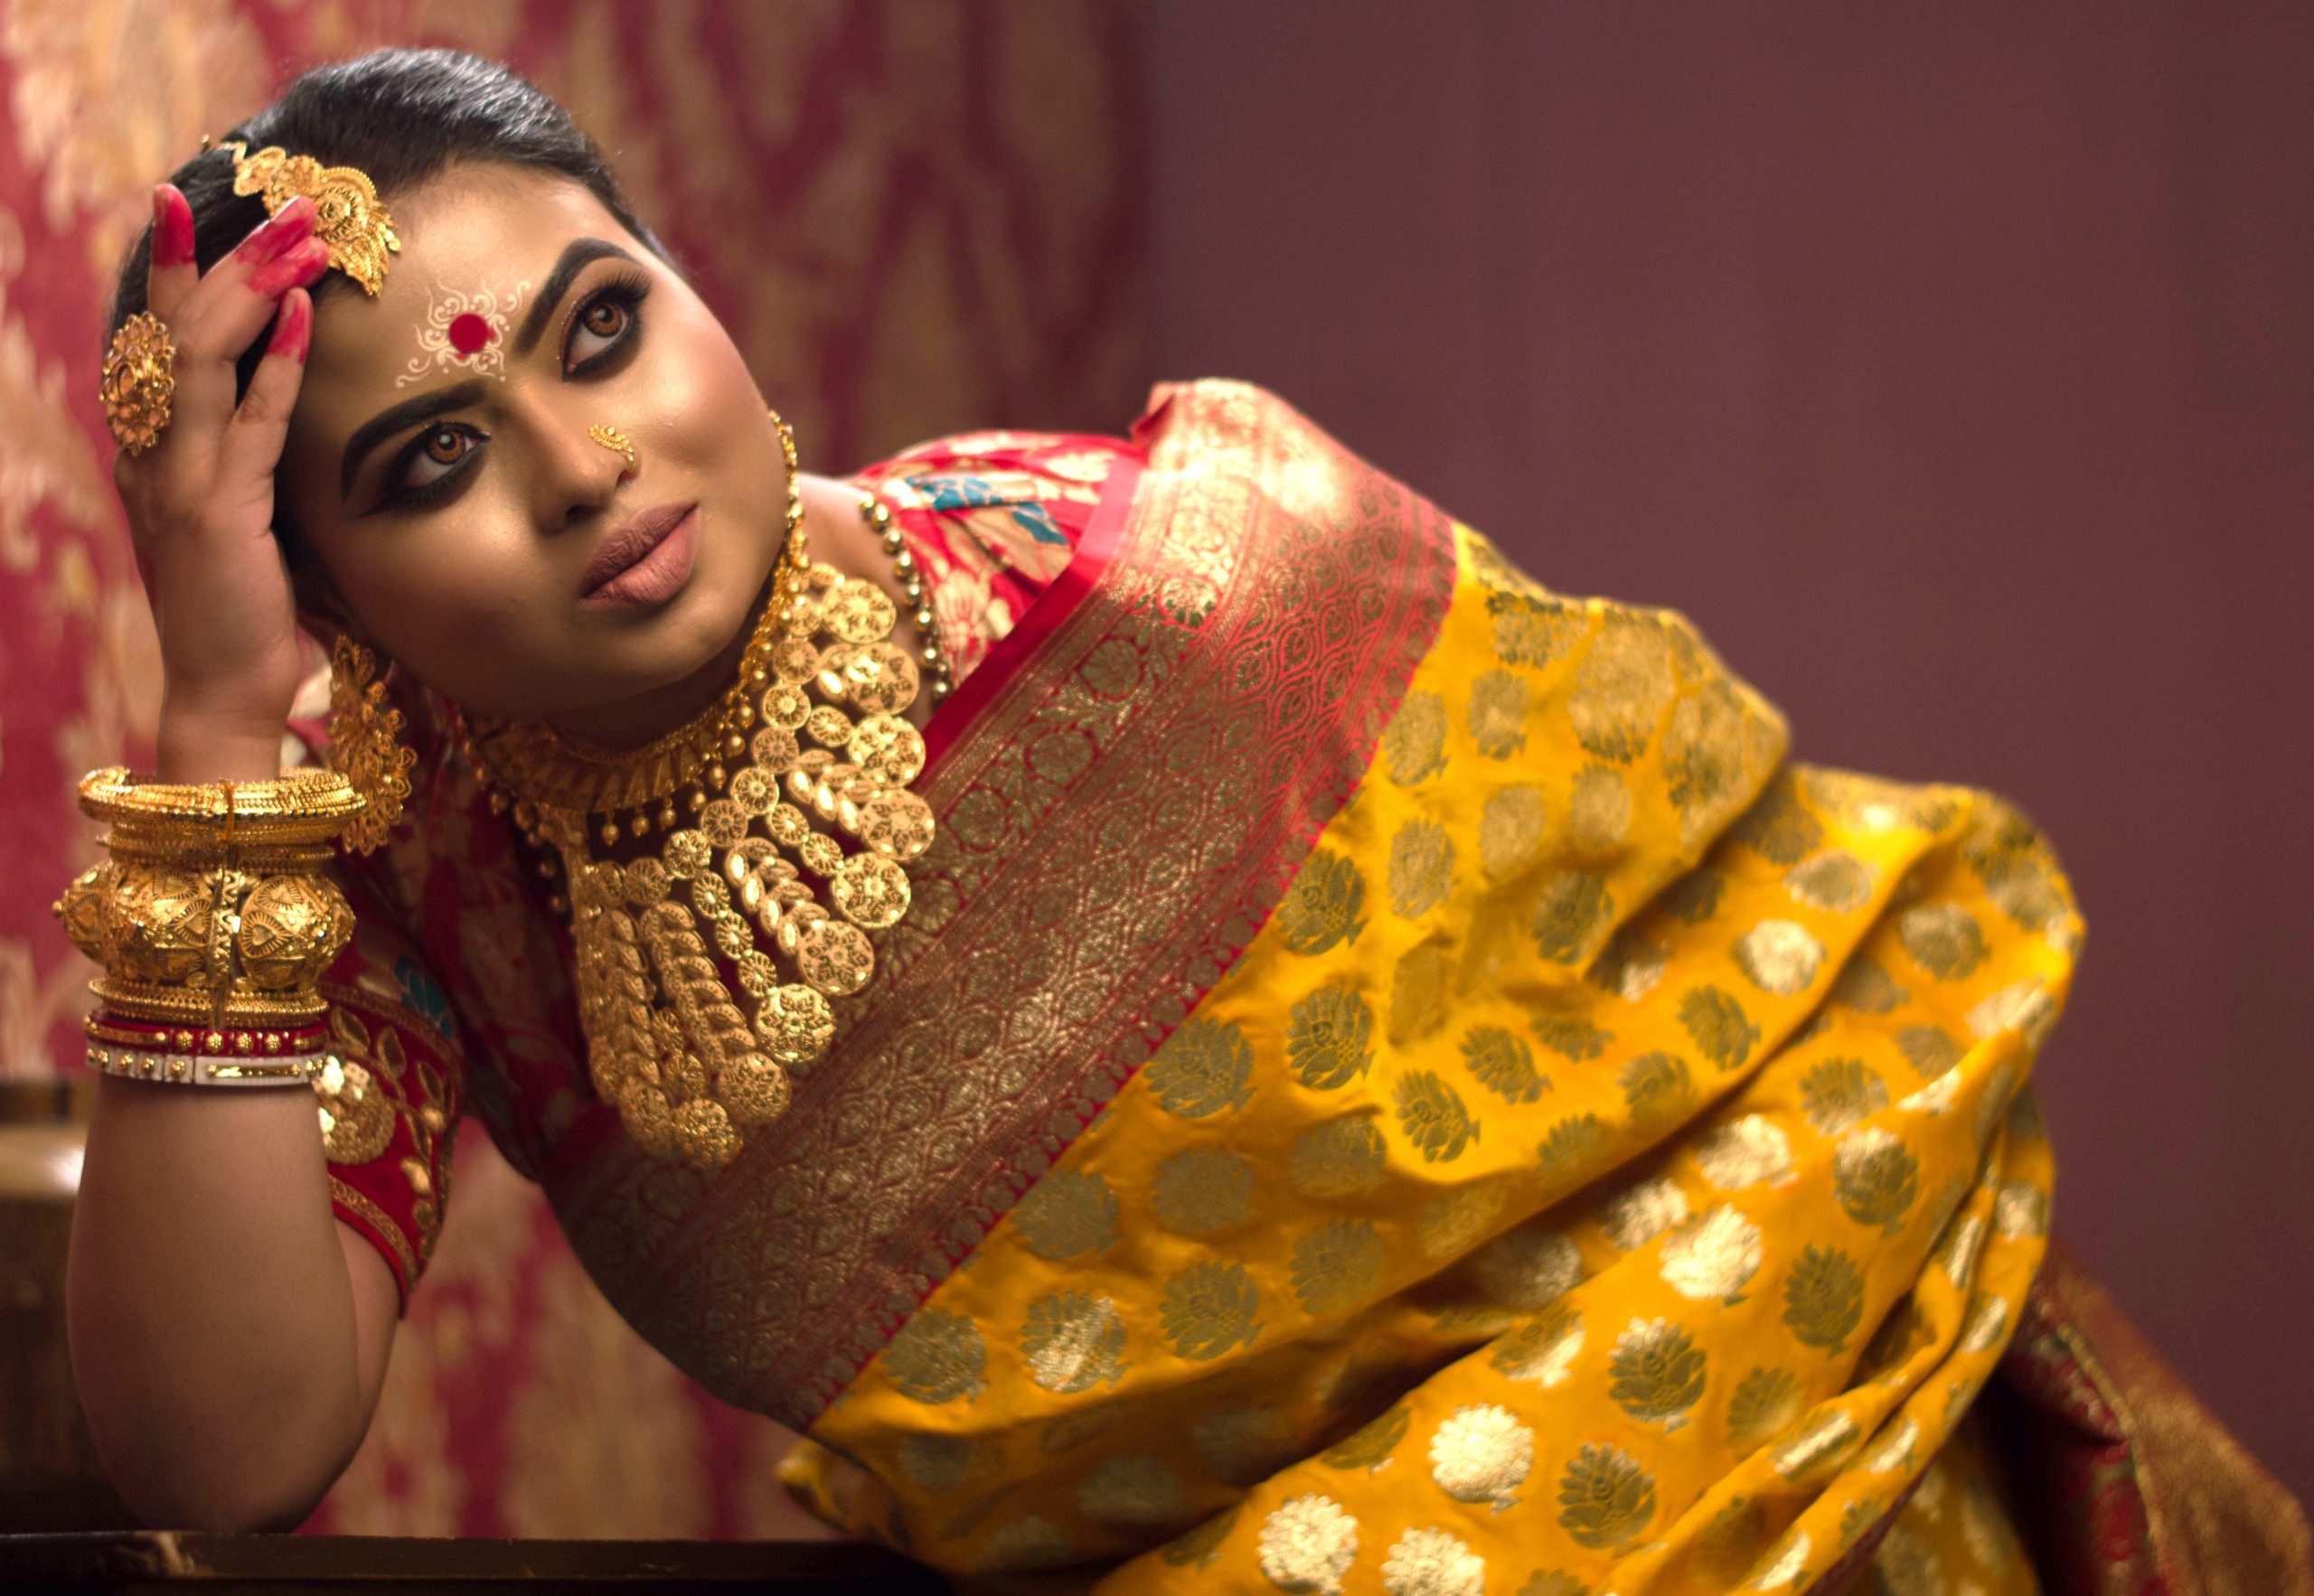 A Bengali bride